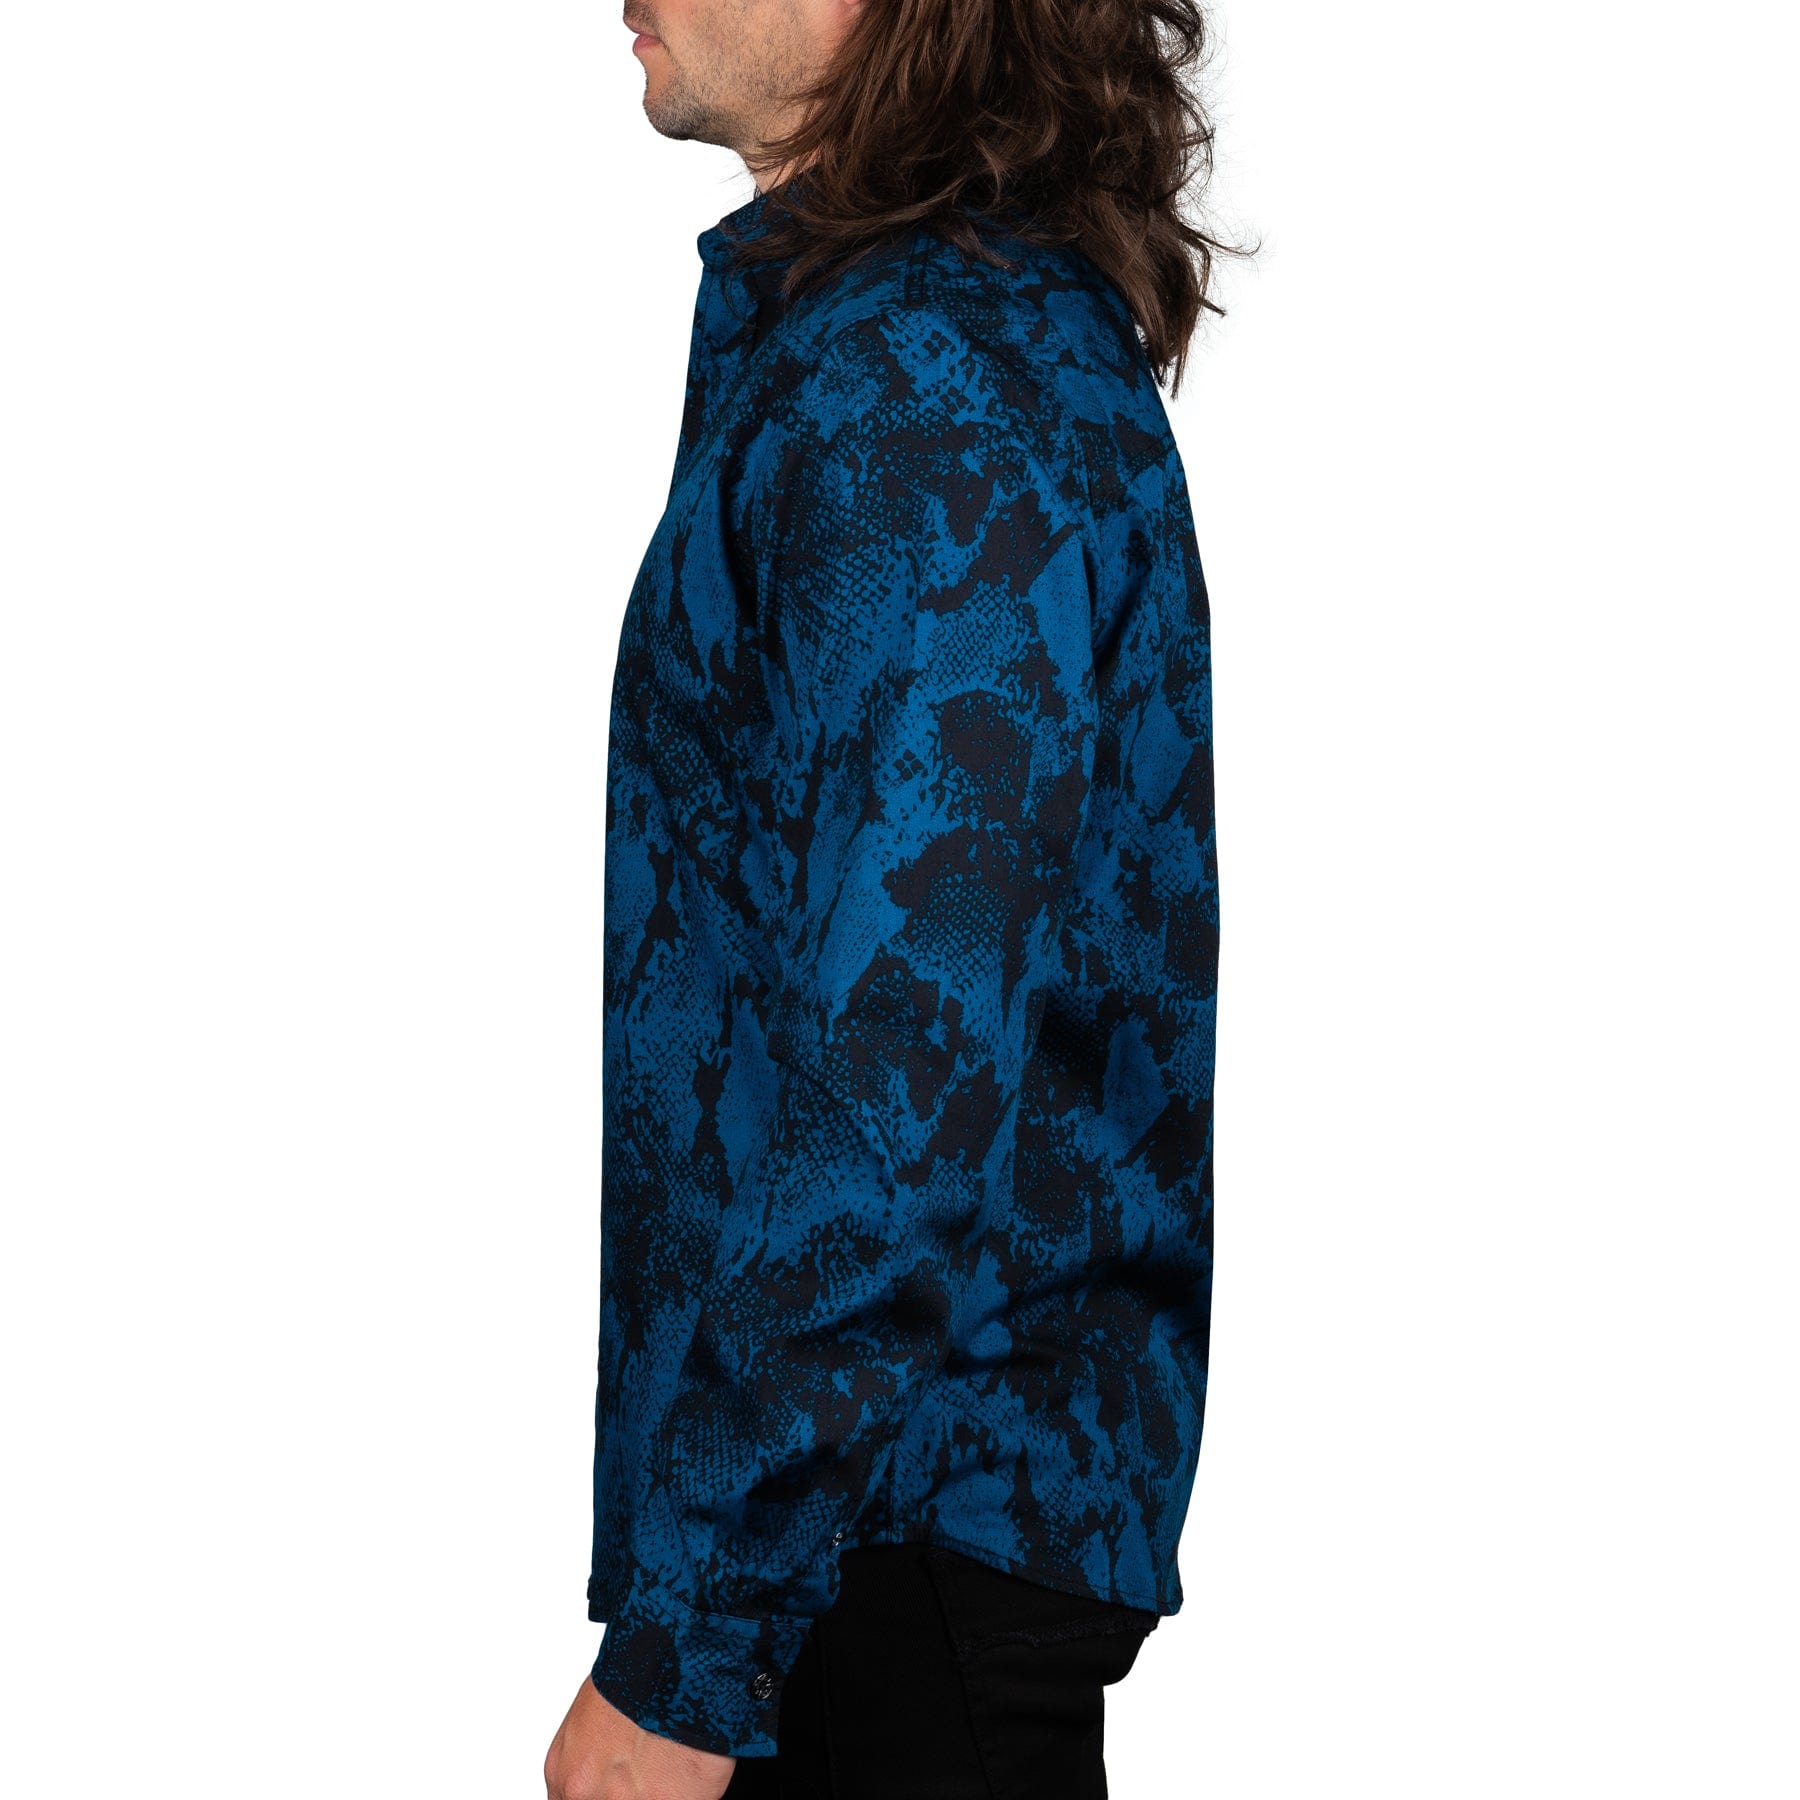 Wornstar Clothing Mens Long Sleeve Shirt. Blue Viper Button Down Shirt.